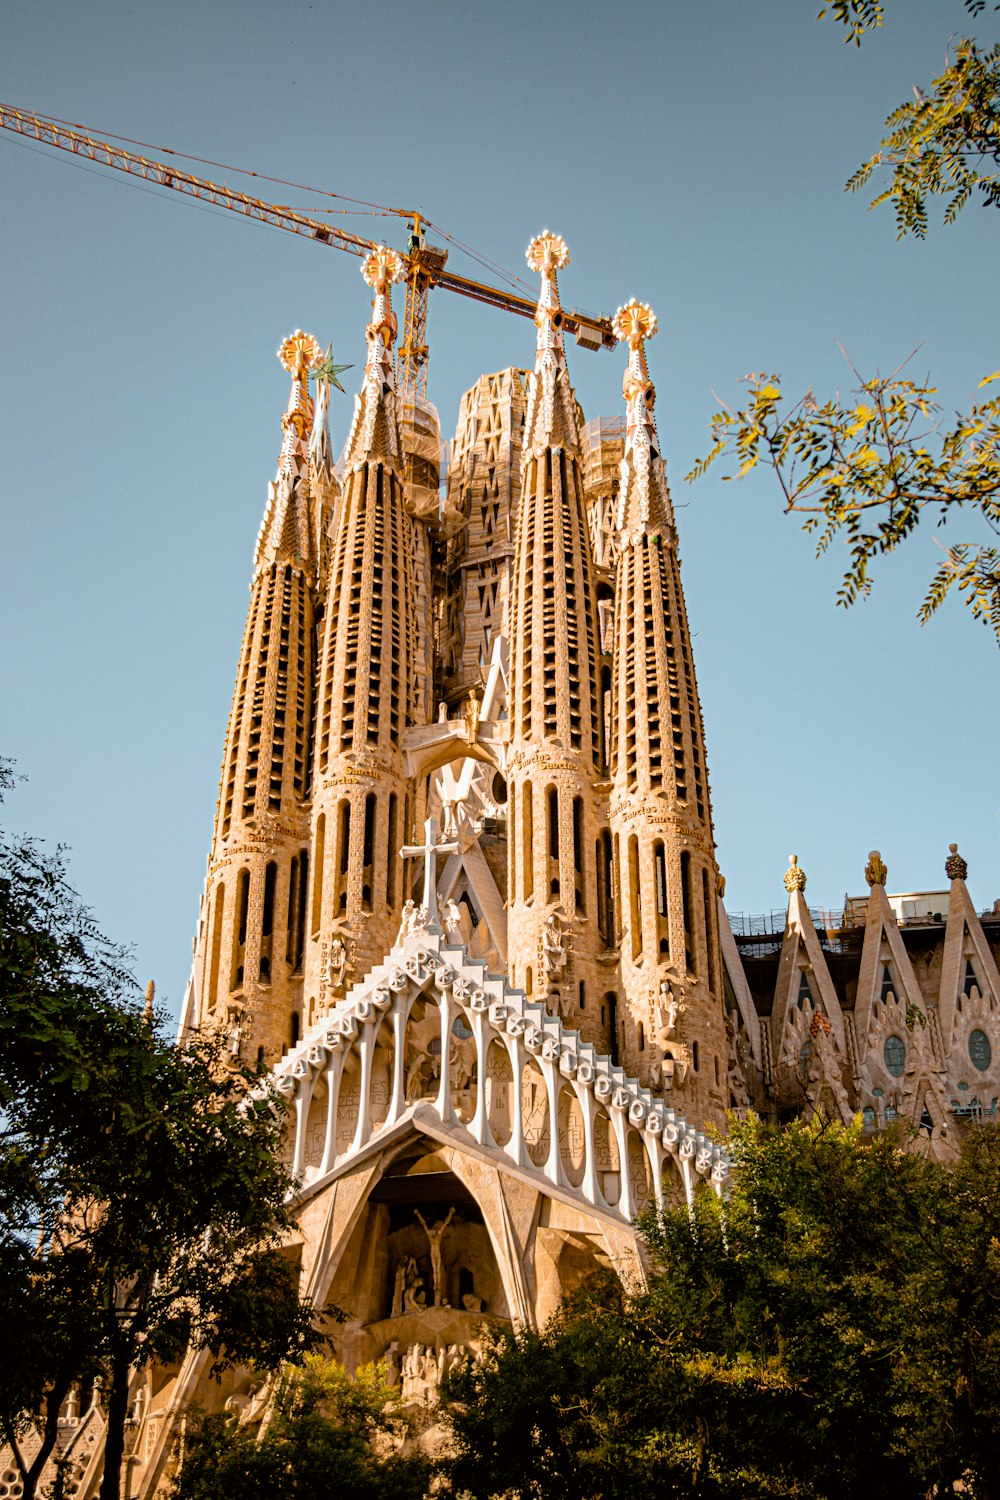 a large tower in Sagrada Família